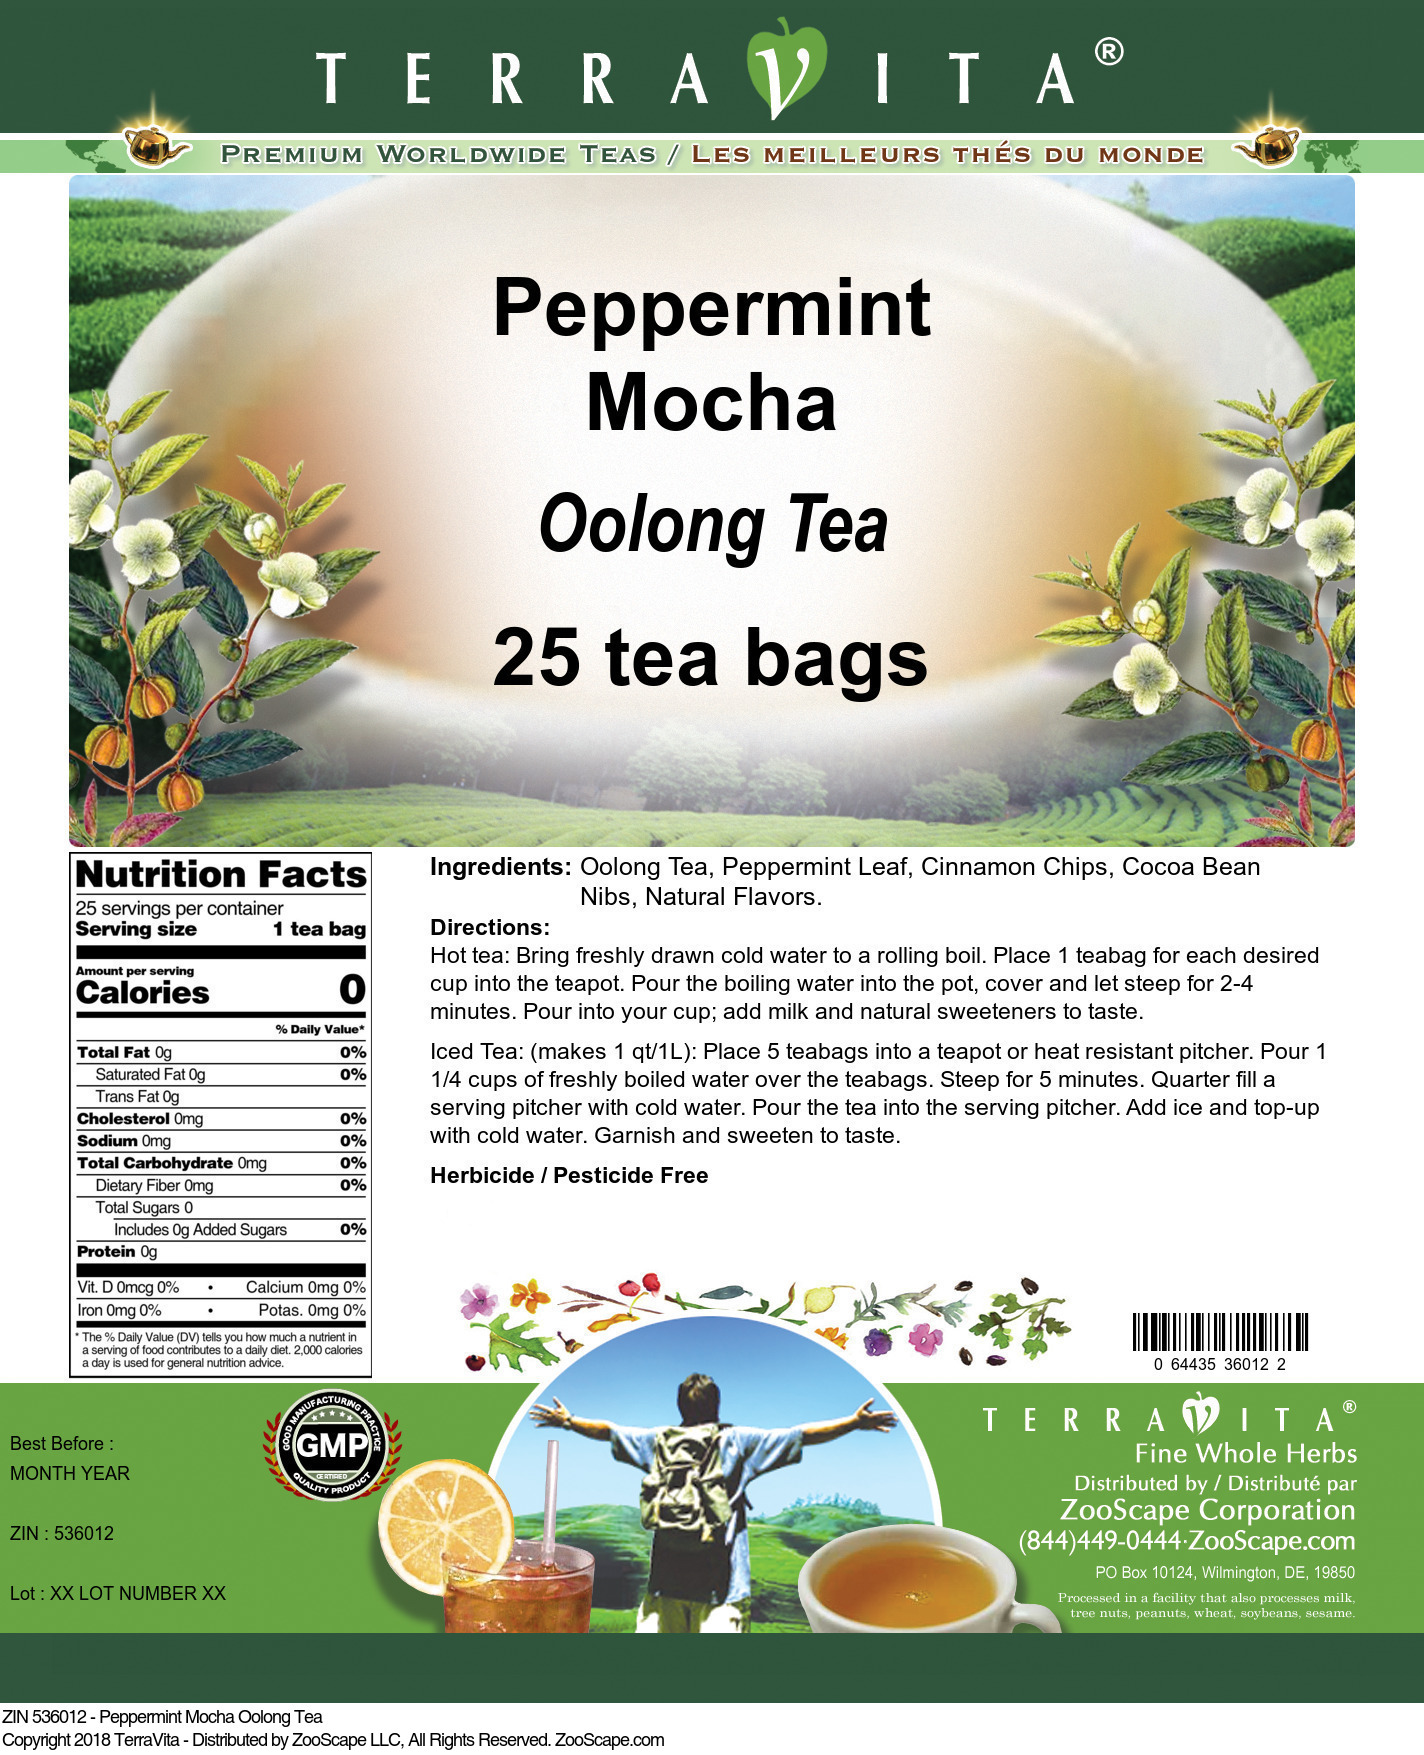 Peppermint Mocha Oolong Tea - Label